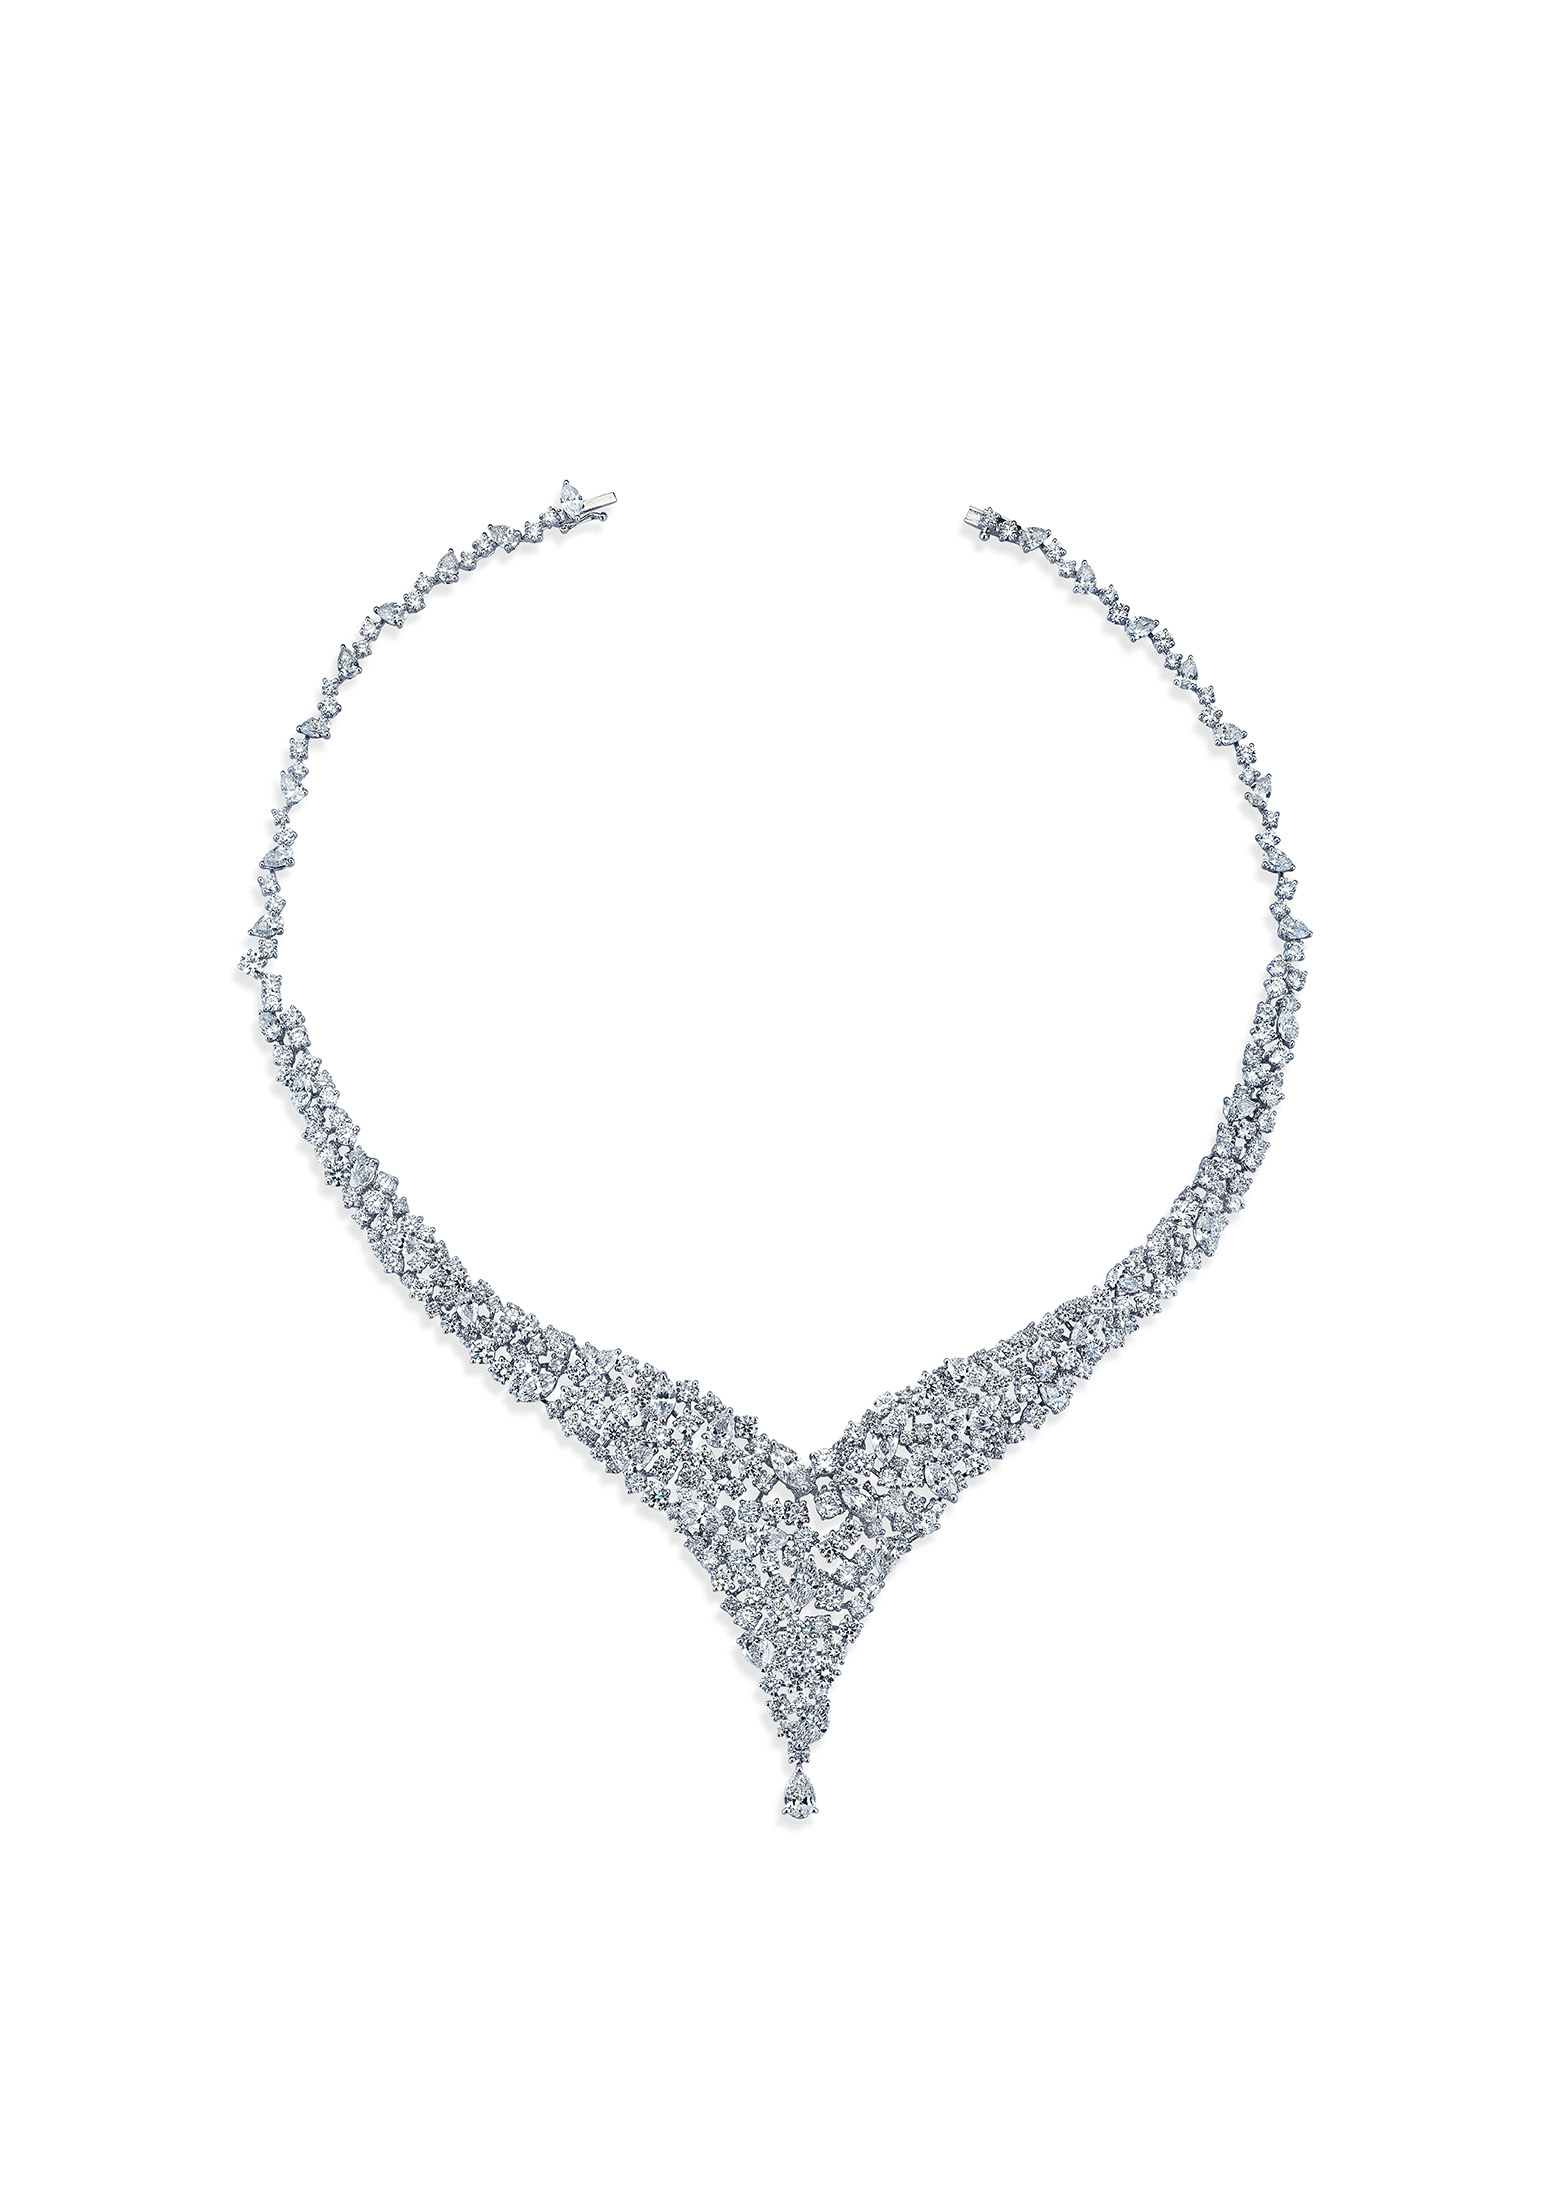 38.23 ct Diamond Necklace